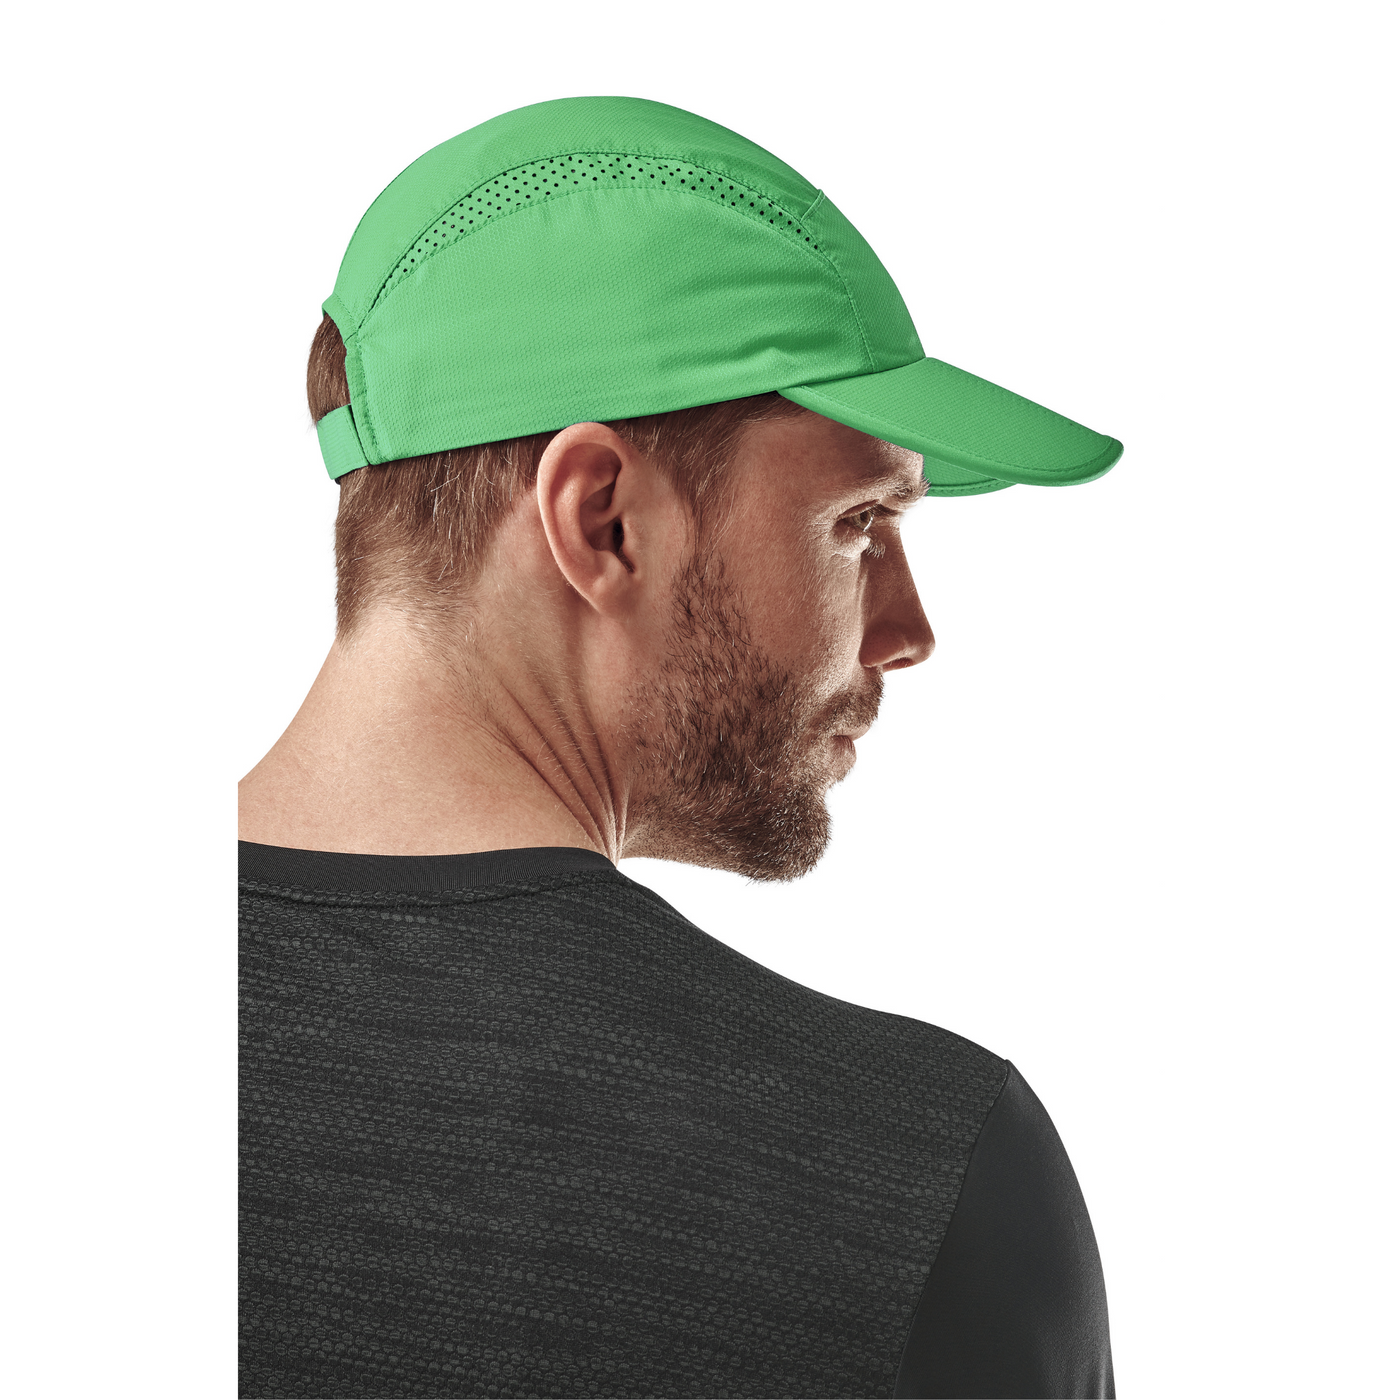 Run Cap, Green, Back View Model, Men